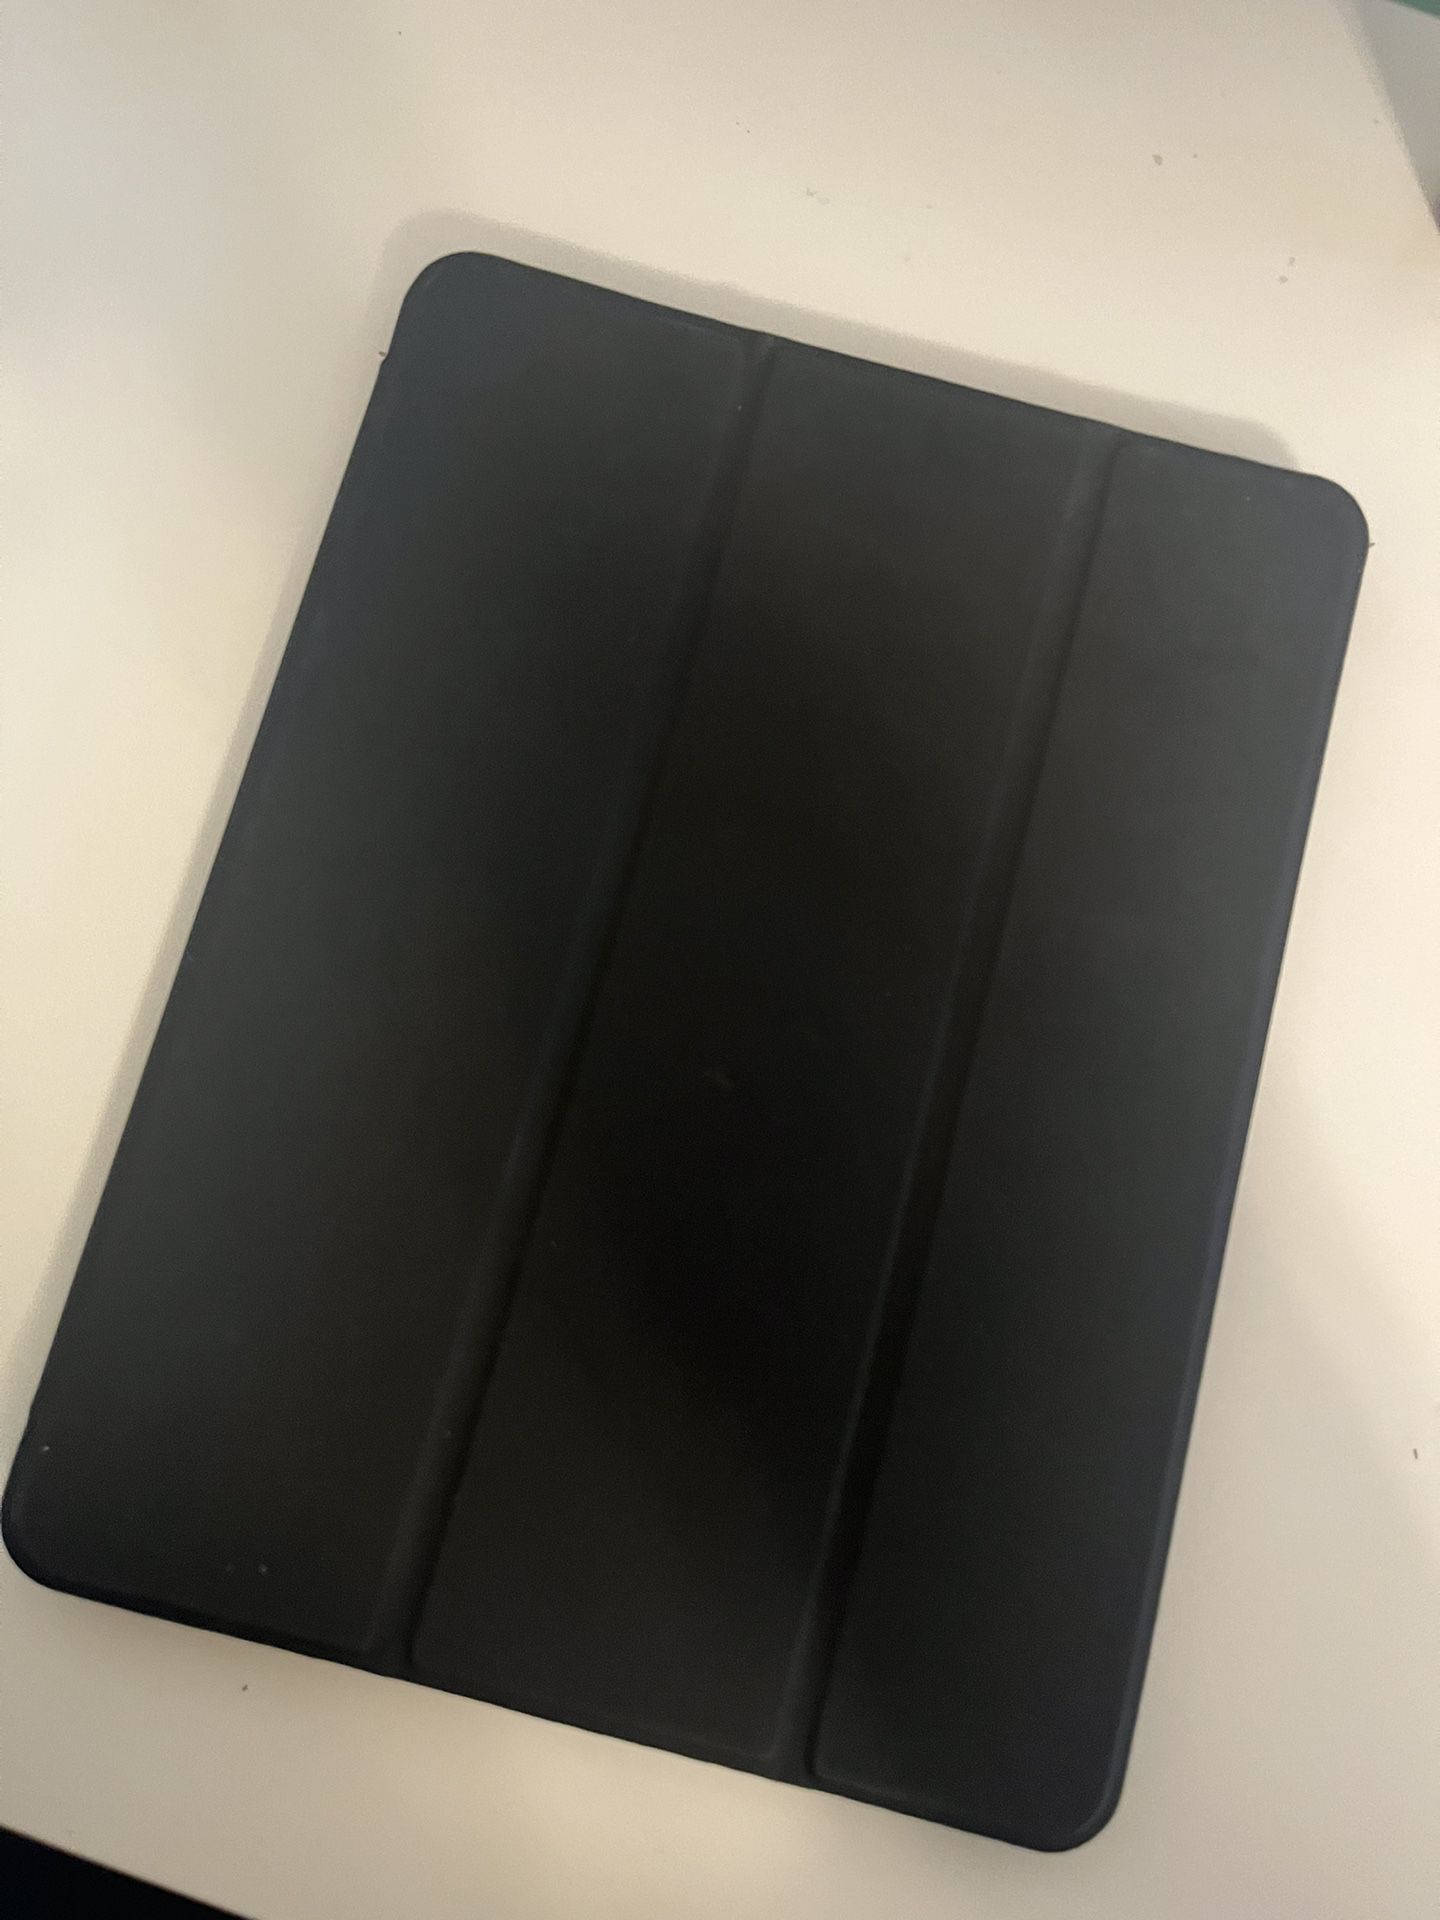 Black iPad Case